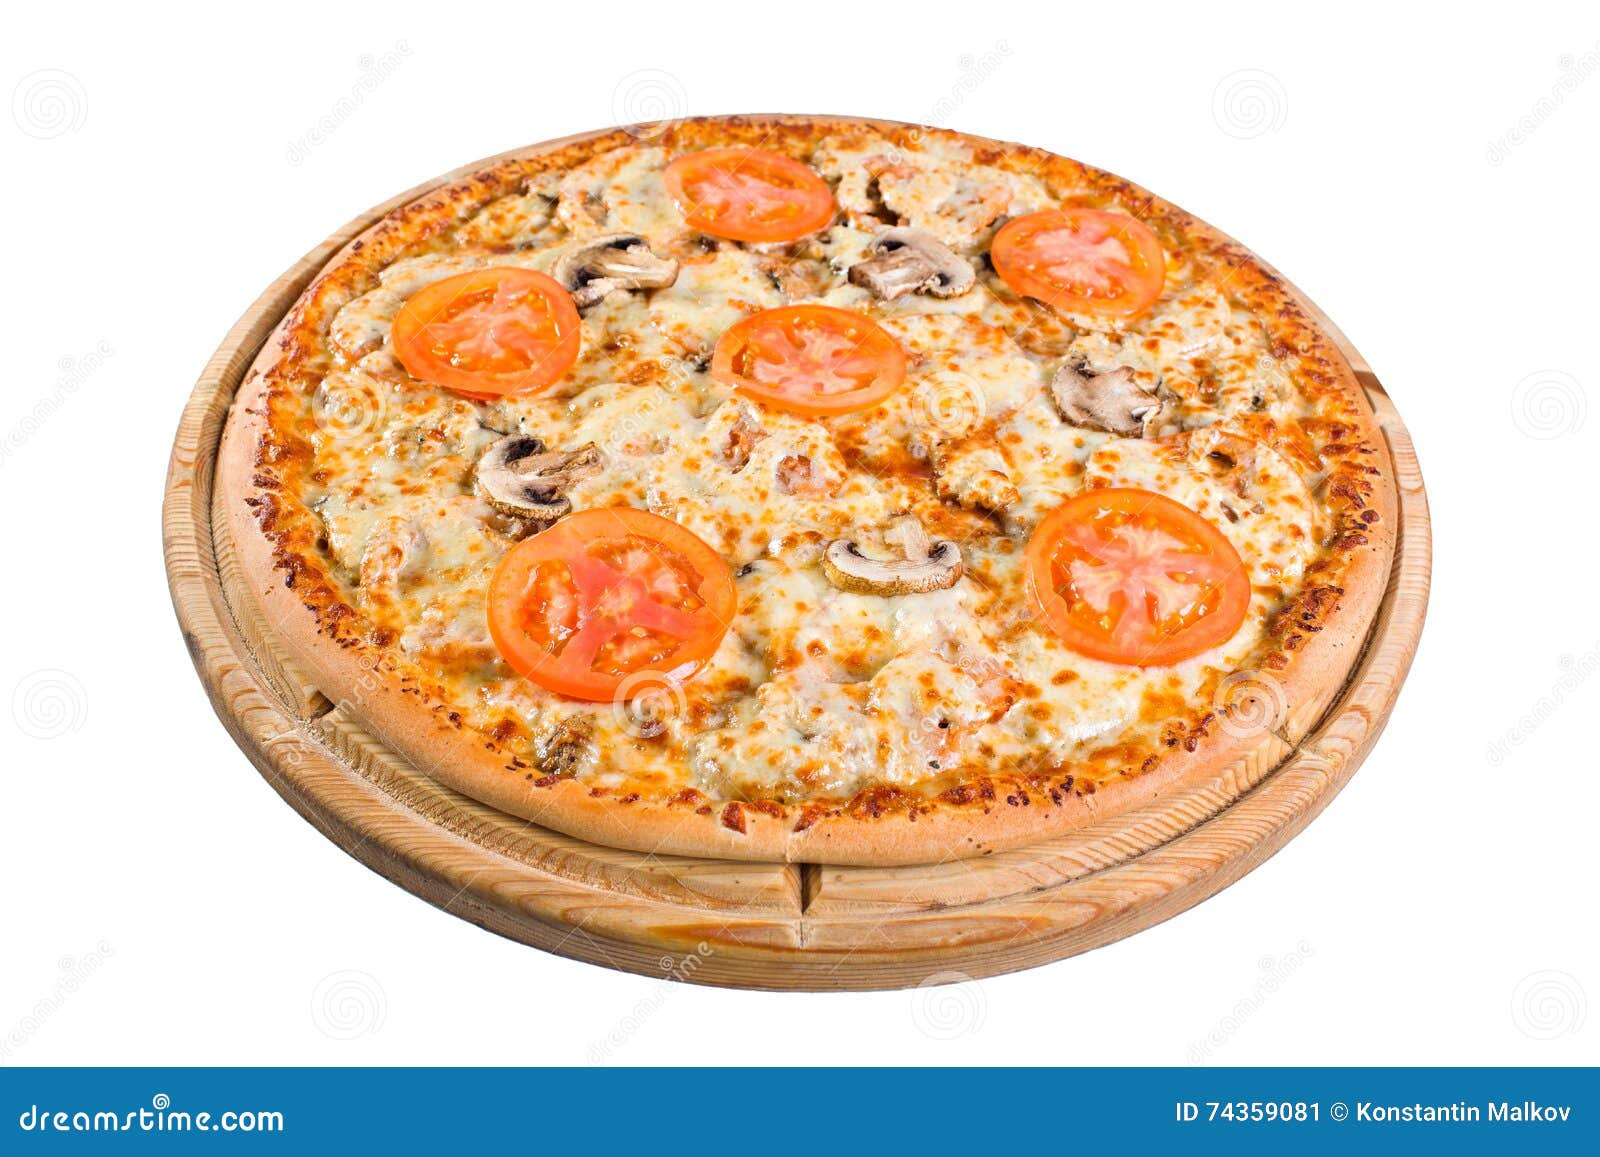 пепперони пицца заказать нижний новгород фото 108